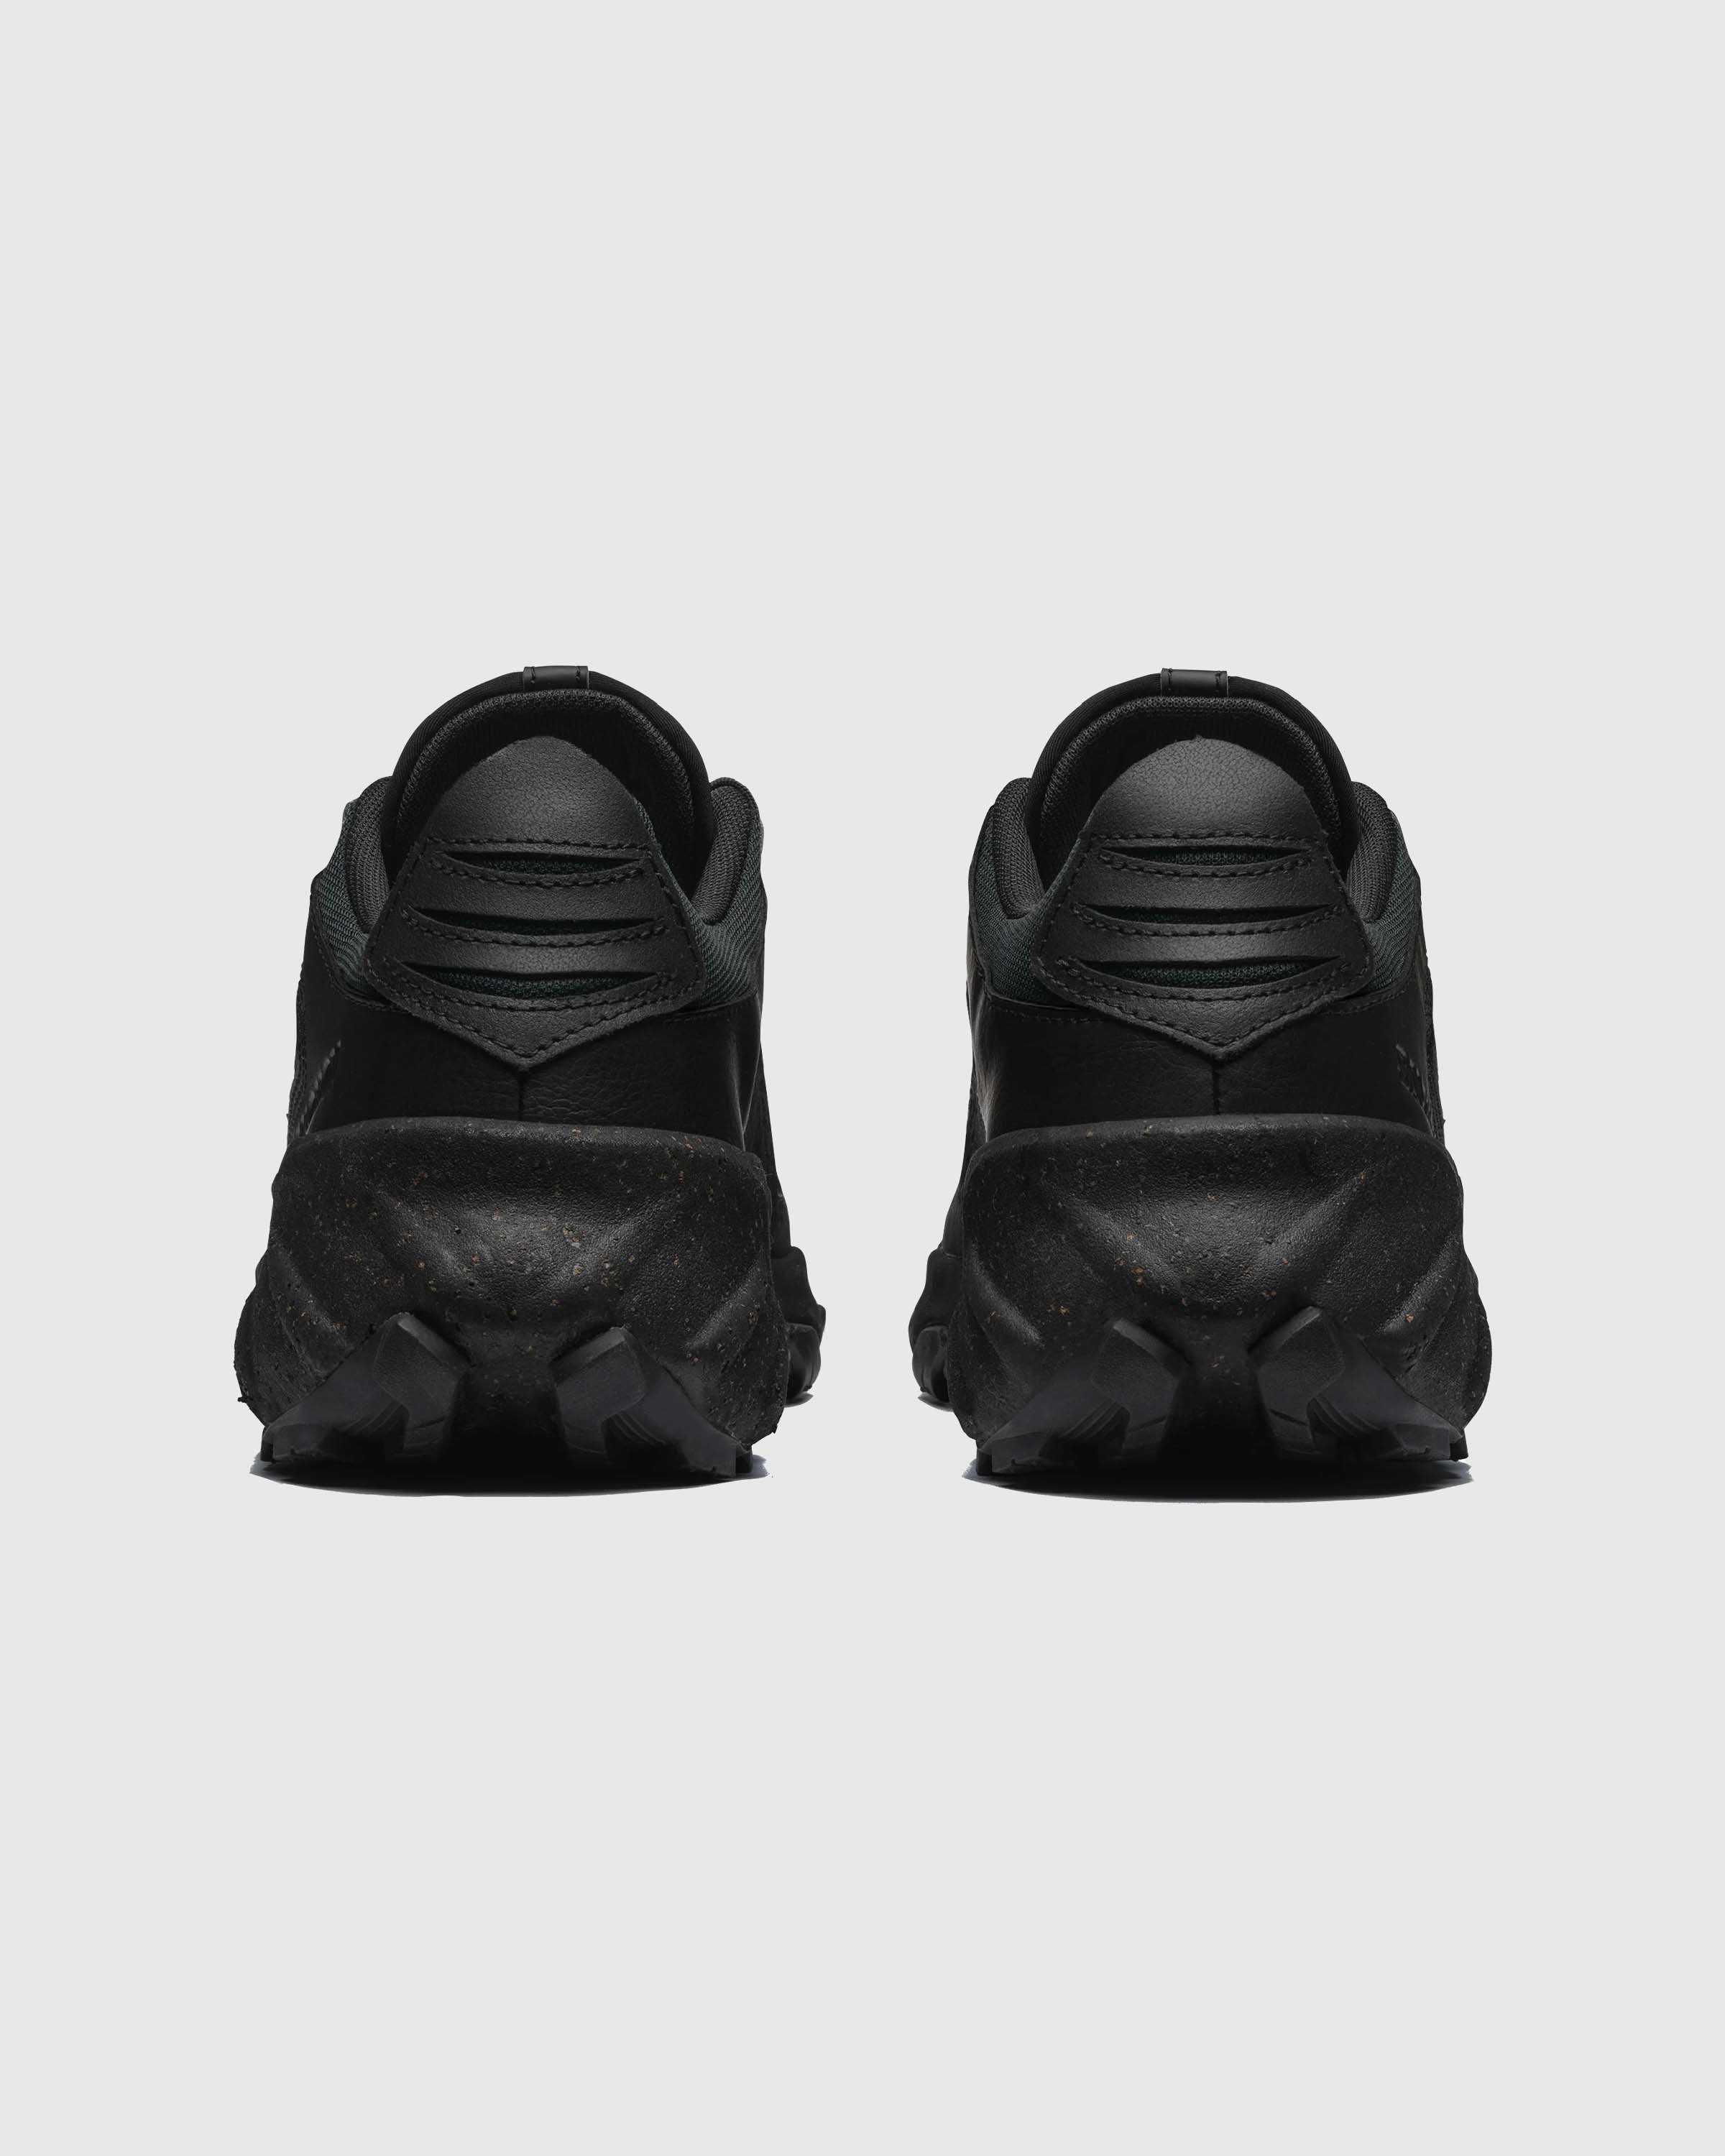 Salomon - Speedverse PRG Black/Alloy/Black - Footwear - Black - Image 3